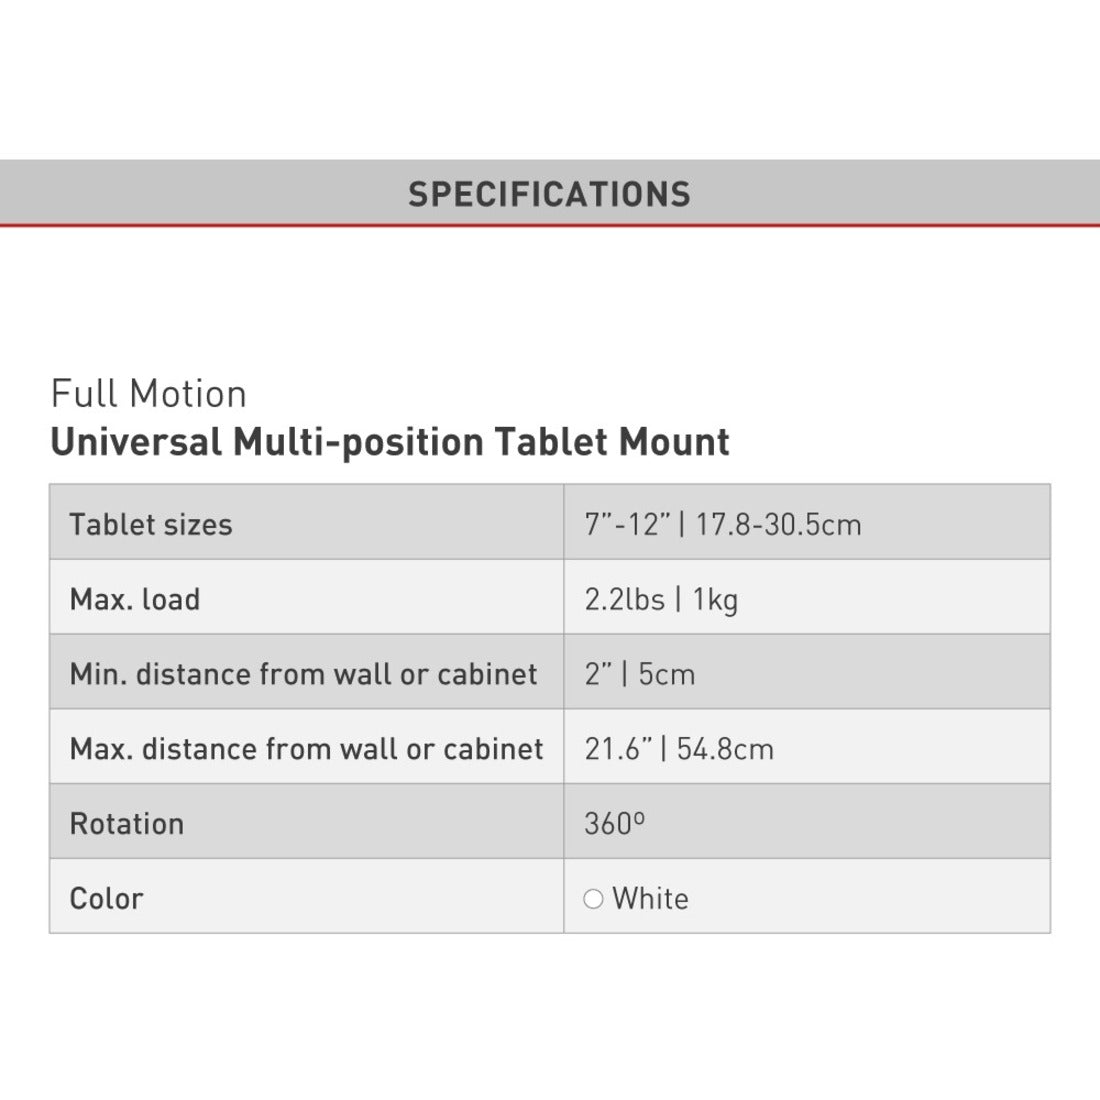 Barkan T56 Full-Motion Tablet Mount for Tablets 7-12" & E-readers 6-10", Durable, 360° Rotation